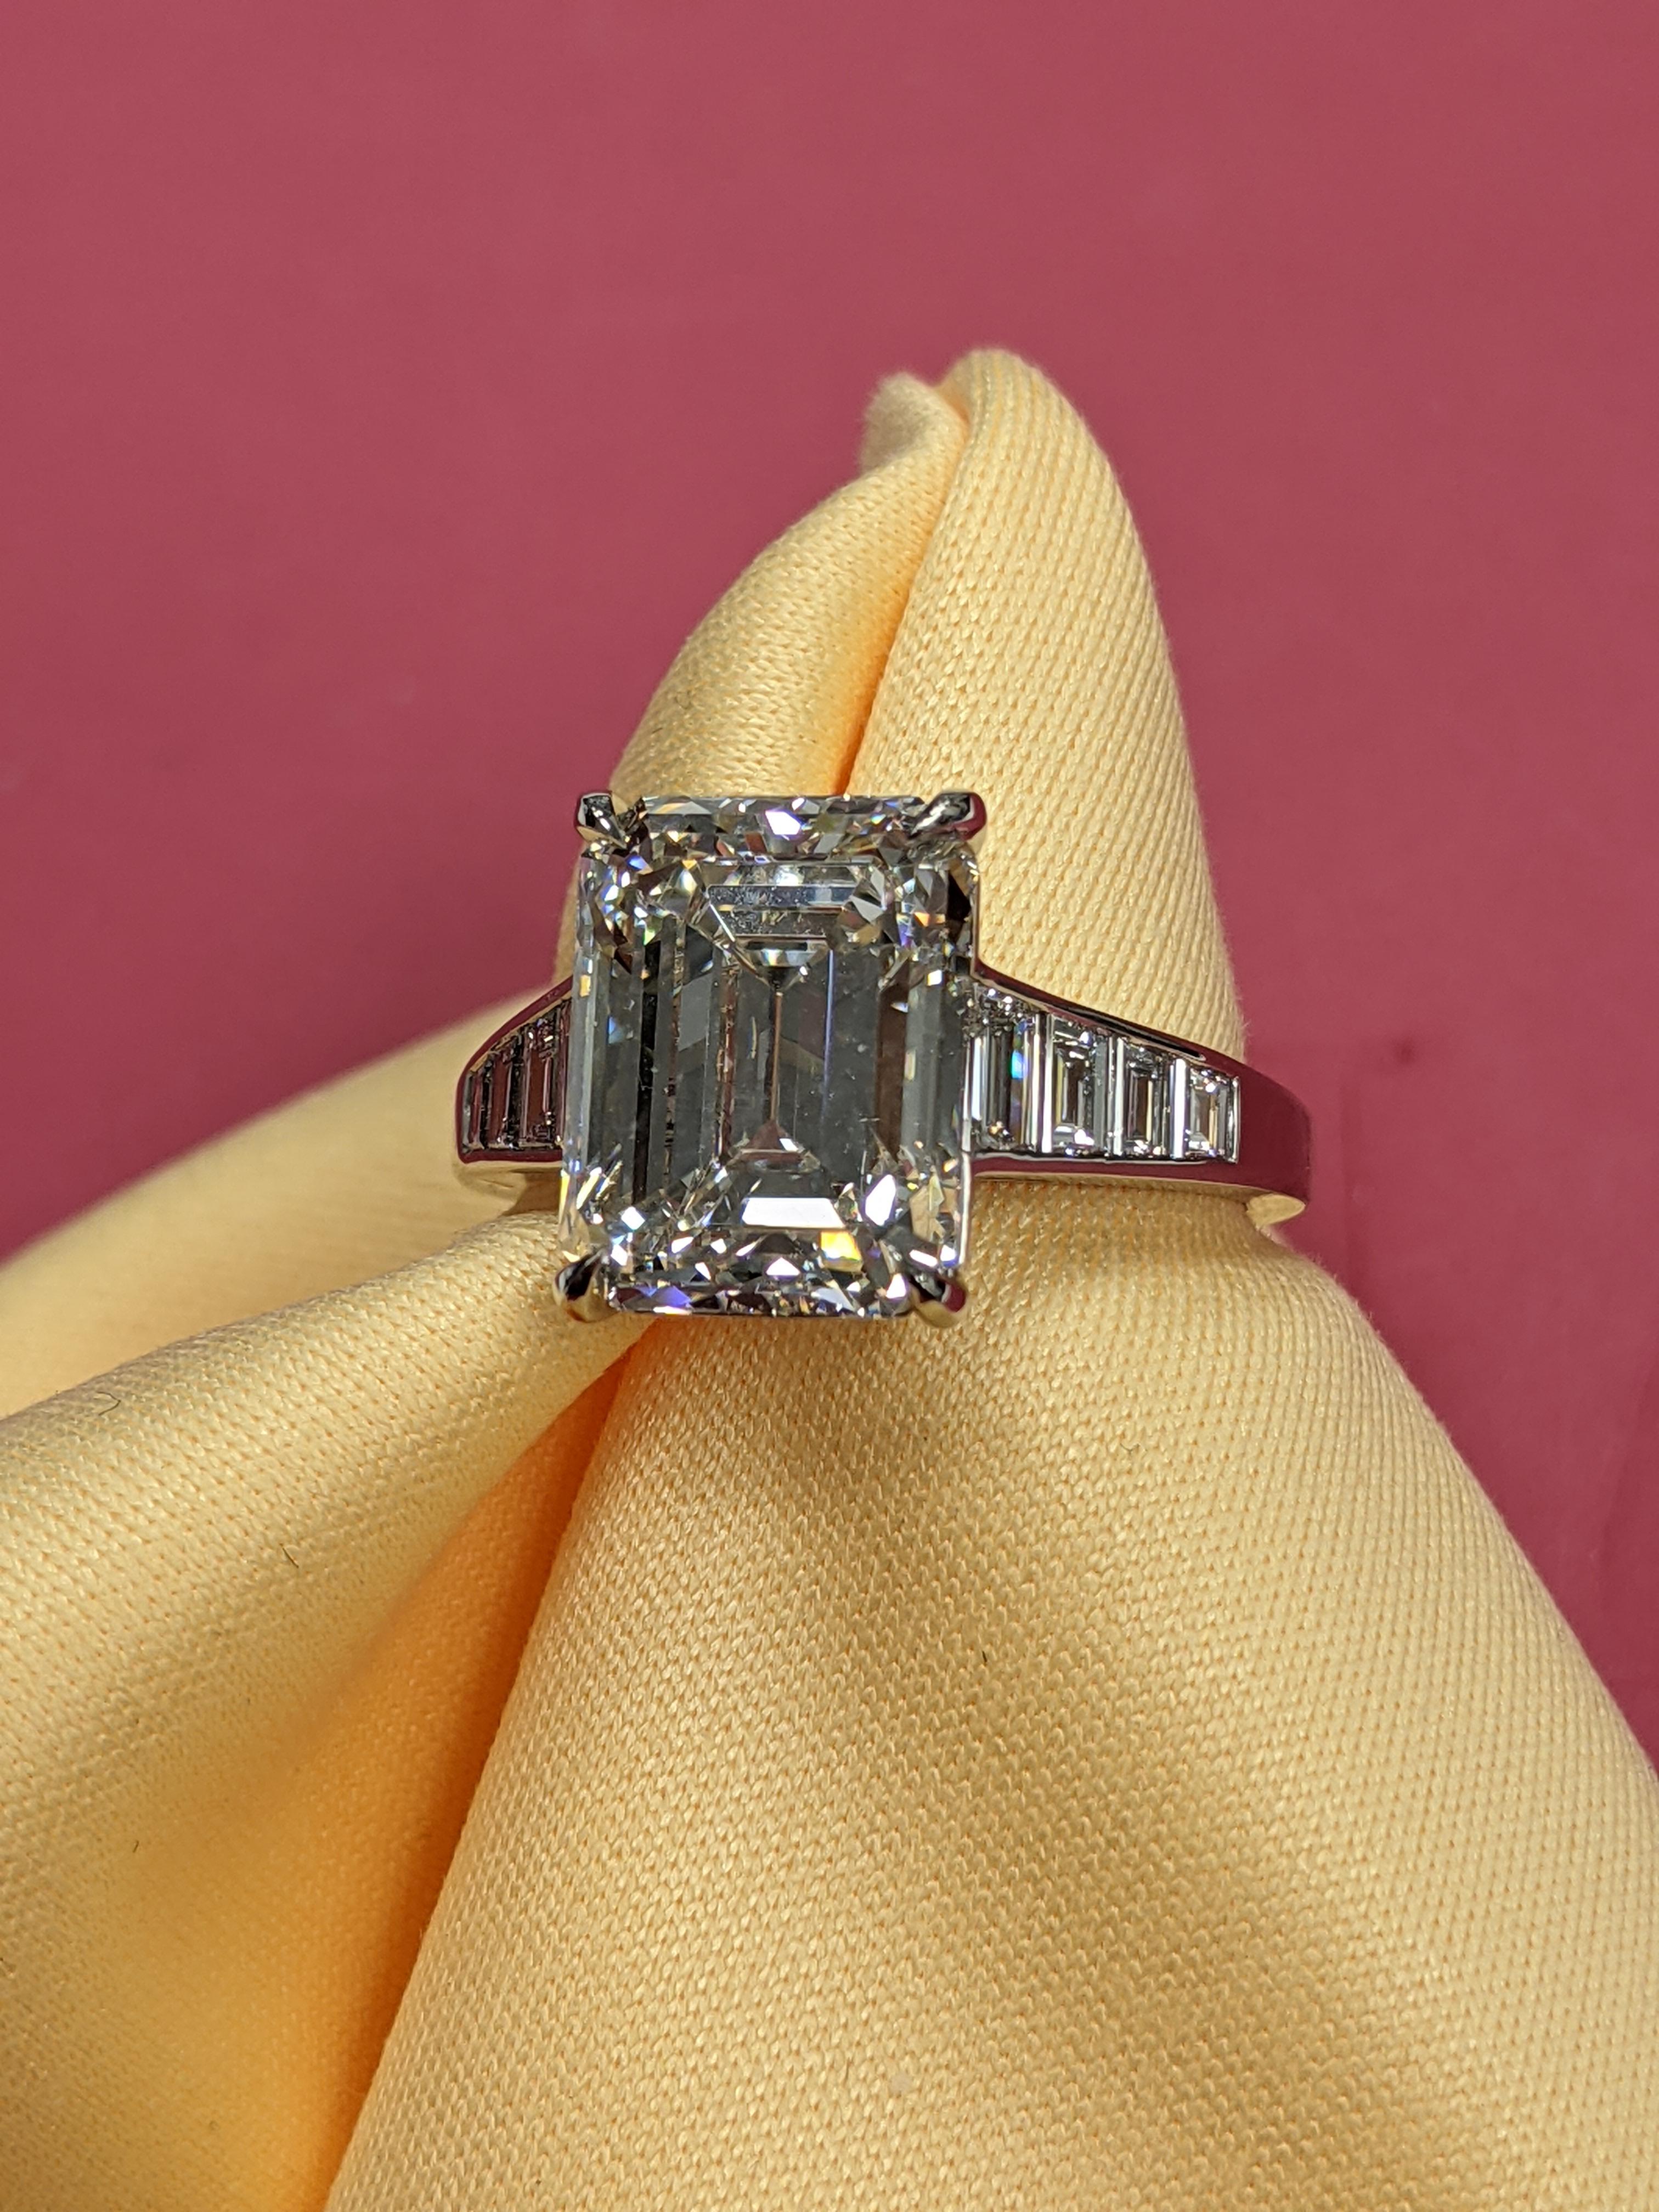 5 Ct. H VVS2 Emerald Cut GIA Certified Diamond Ring in Platinum 1